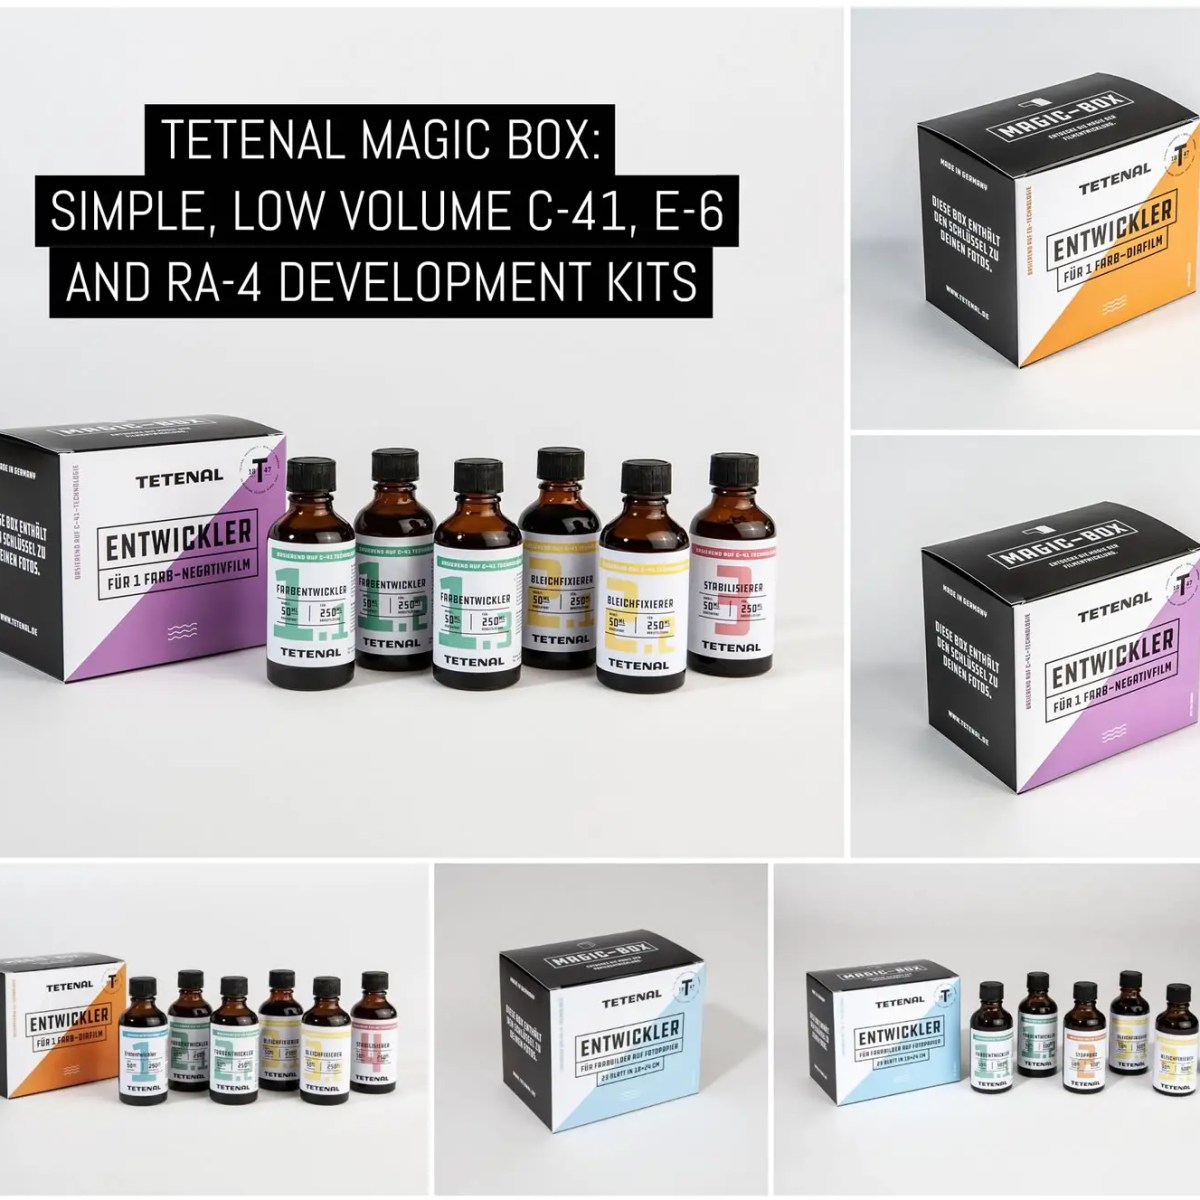 TETENAL Magic Box- Simple, low volume C-41, E-6 and RA-4 development kits